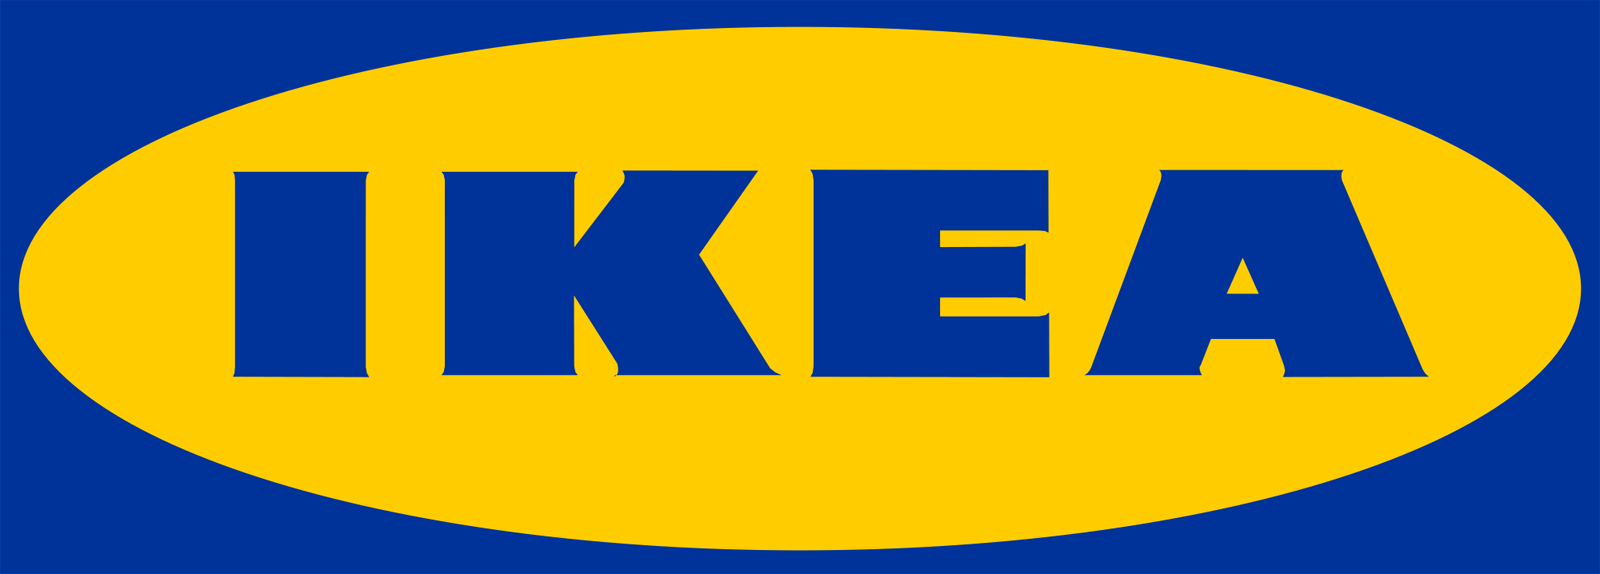 Yellow and Blue Company Logo - IKEA Logo, IKEA Symbol Meaning, History and Evolution